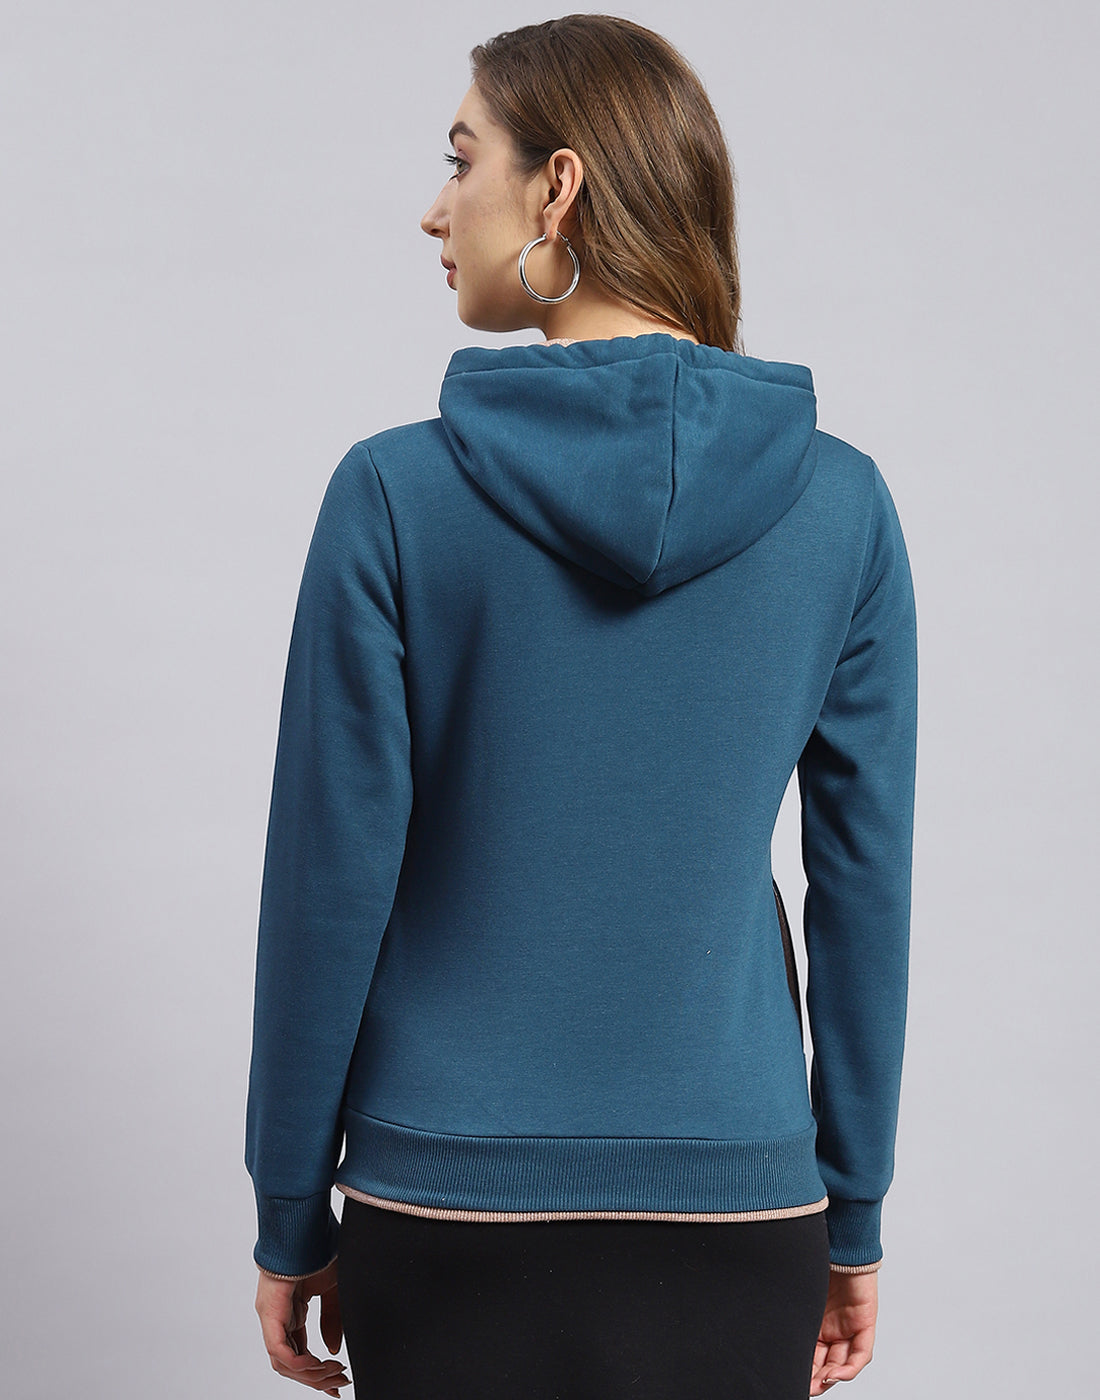 Women Teal Blue Embroidered Hooded Full Sleeve Sweatshirt